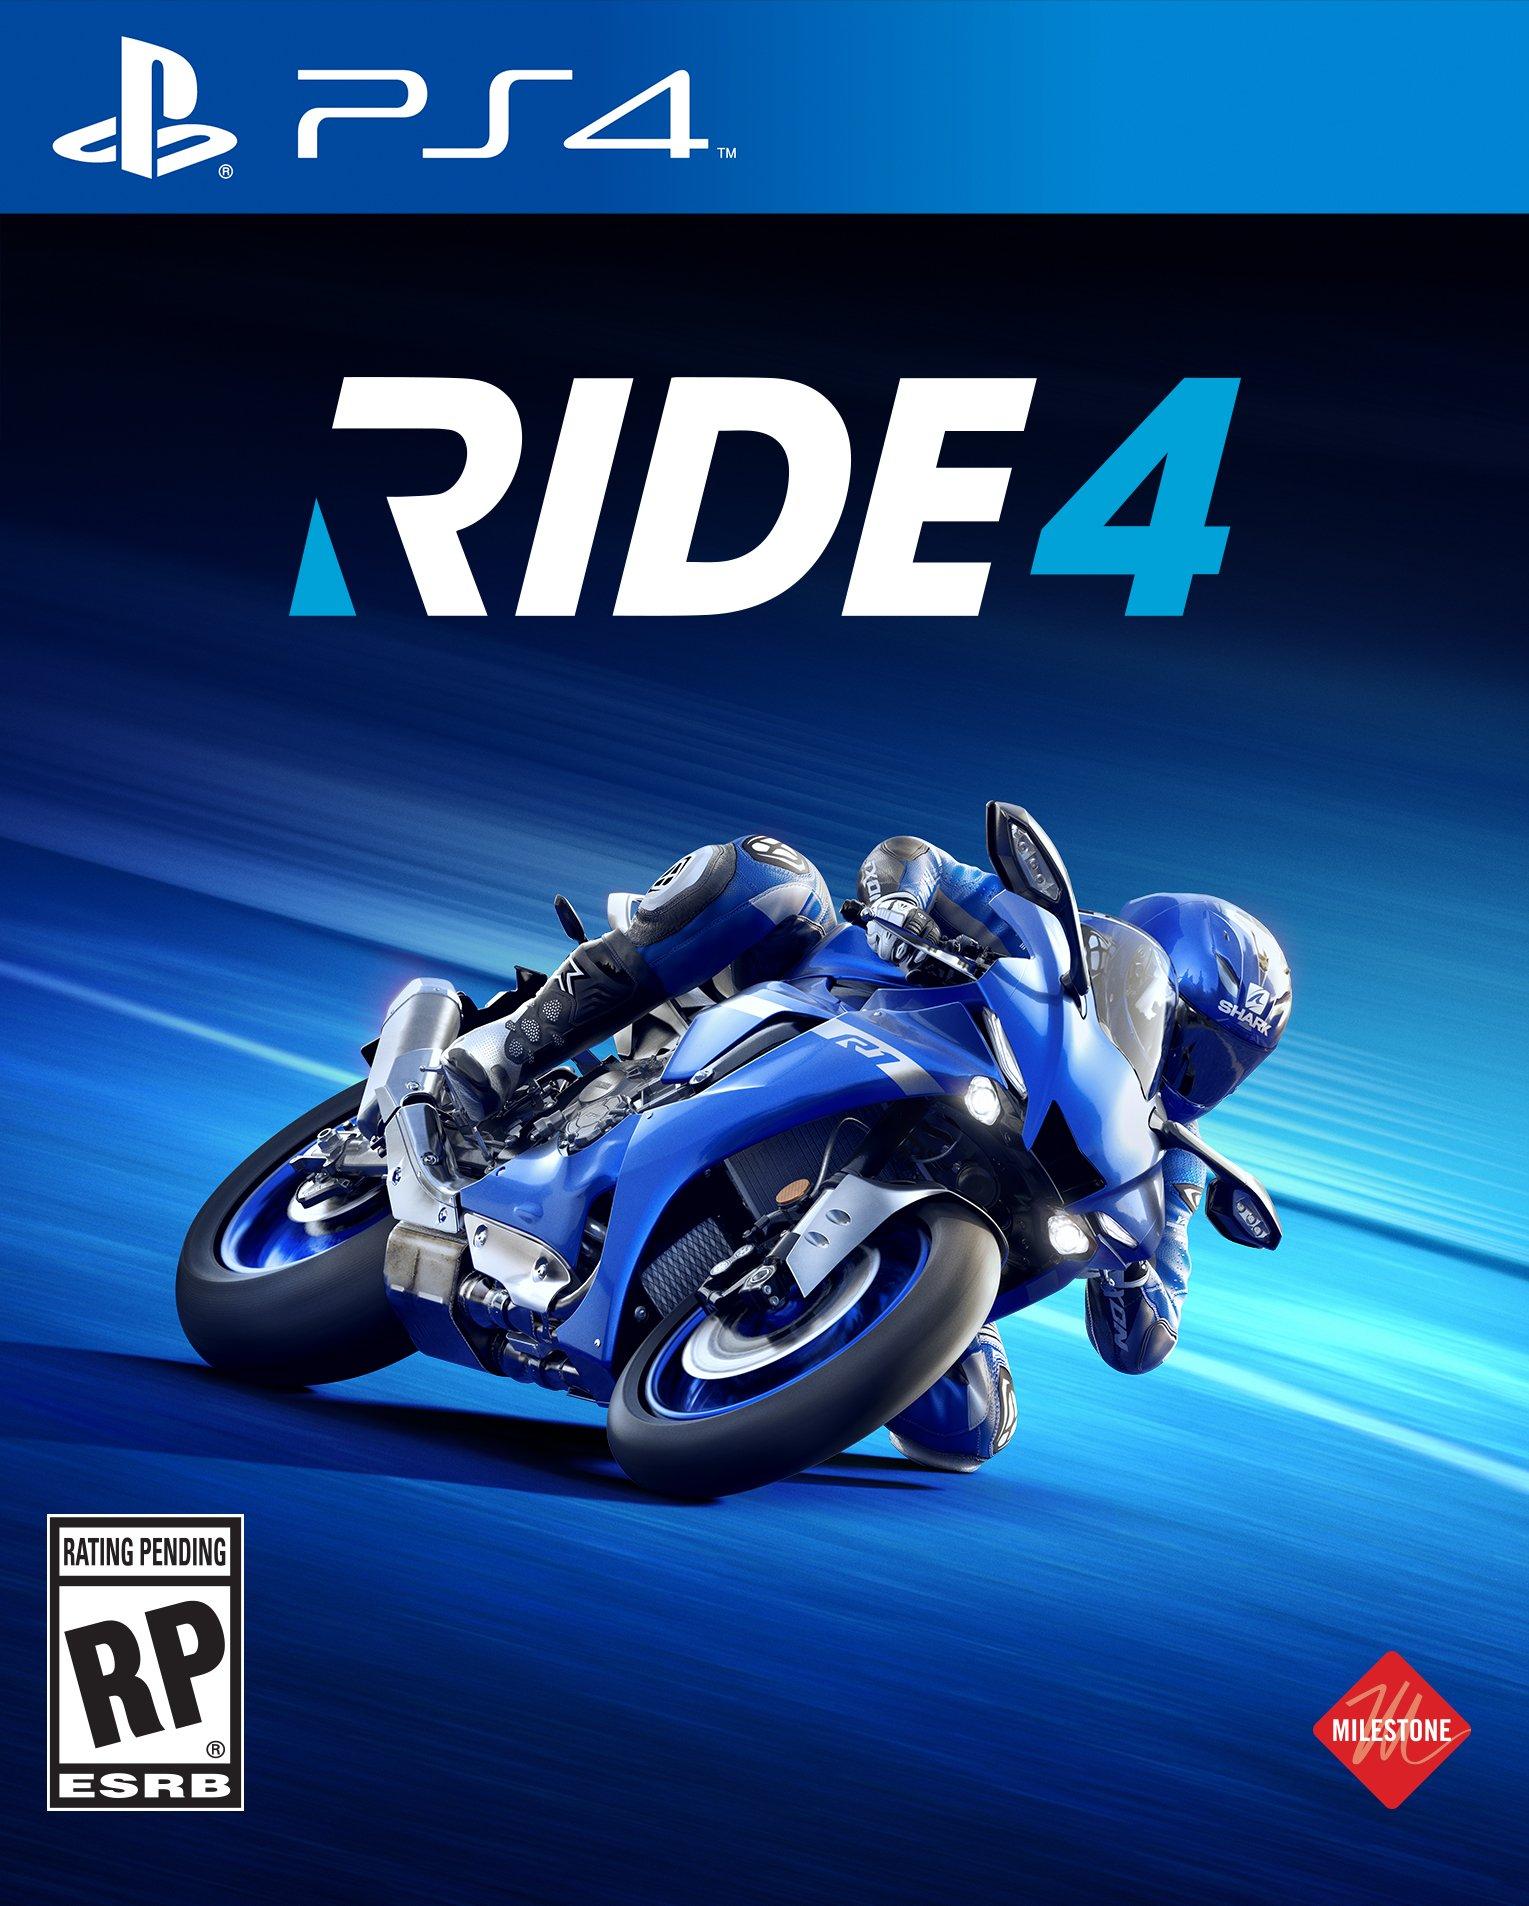 Novo Lacrado Jogo De Corrida De Moto Ride Pra Playstation 4 no Shoptime